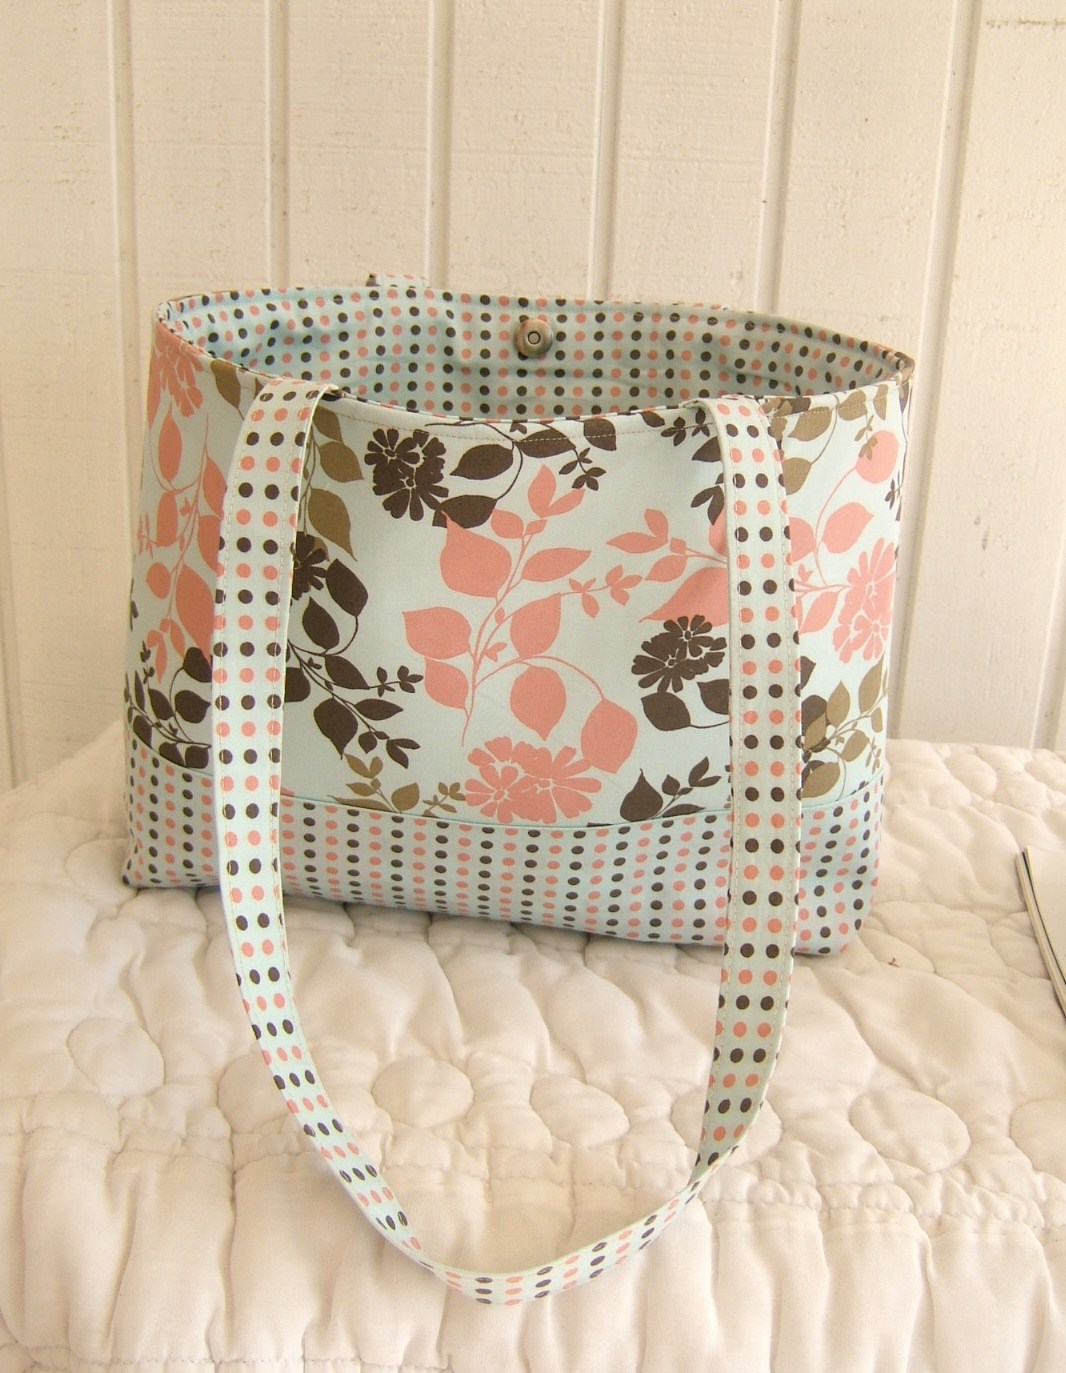 Mrs. Langleyâ€™s Tote Bag Sewing Pattern â€“ Free!!! | The Hip Home Ec ...